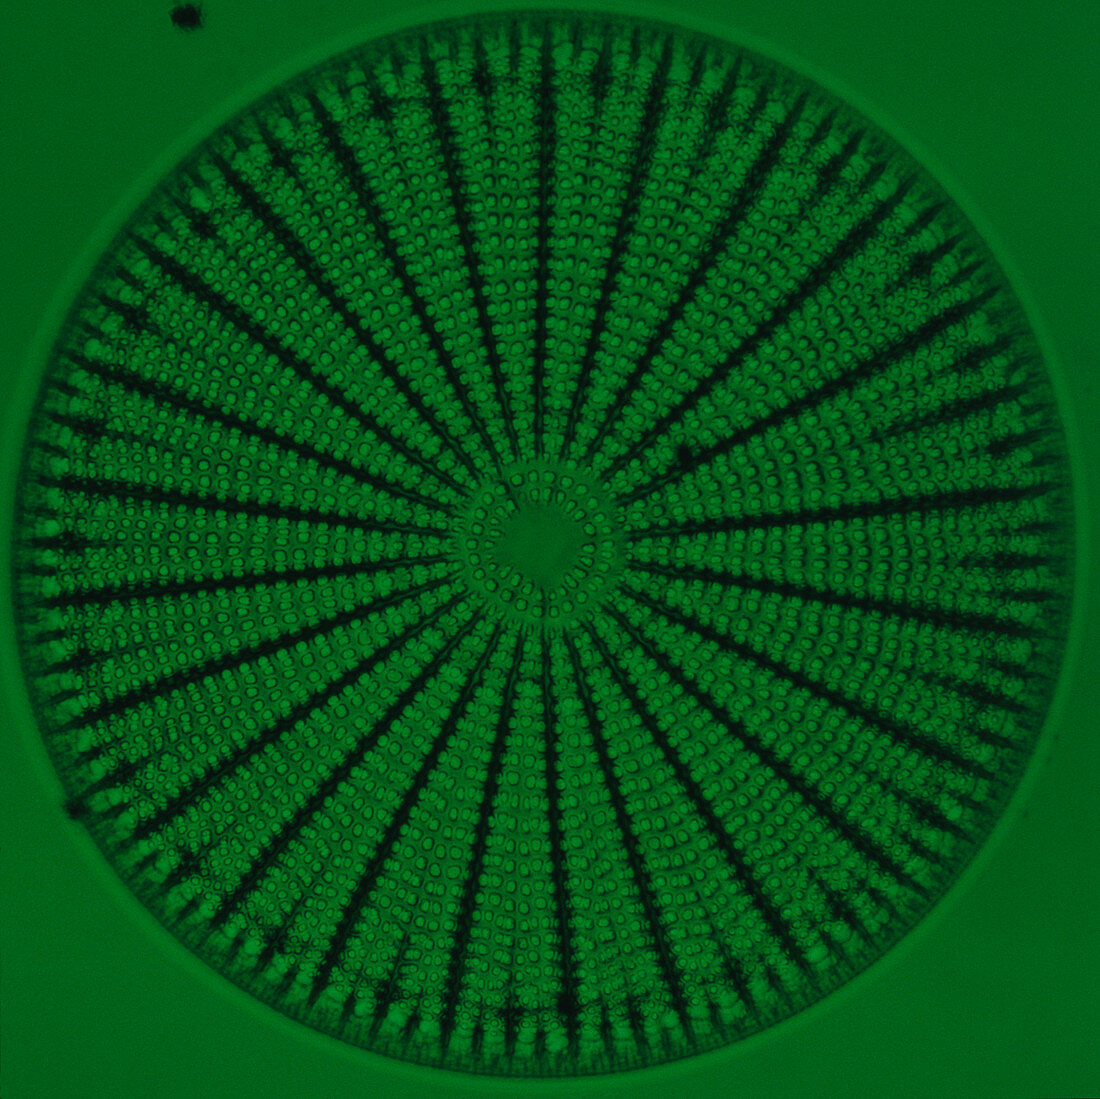 Wheel-shaped diatom,Arachnoidiscus